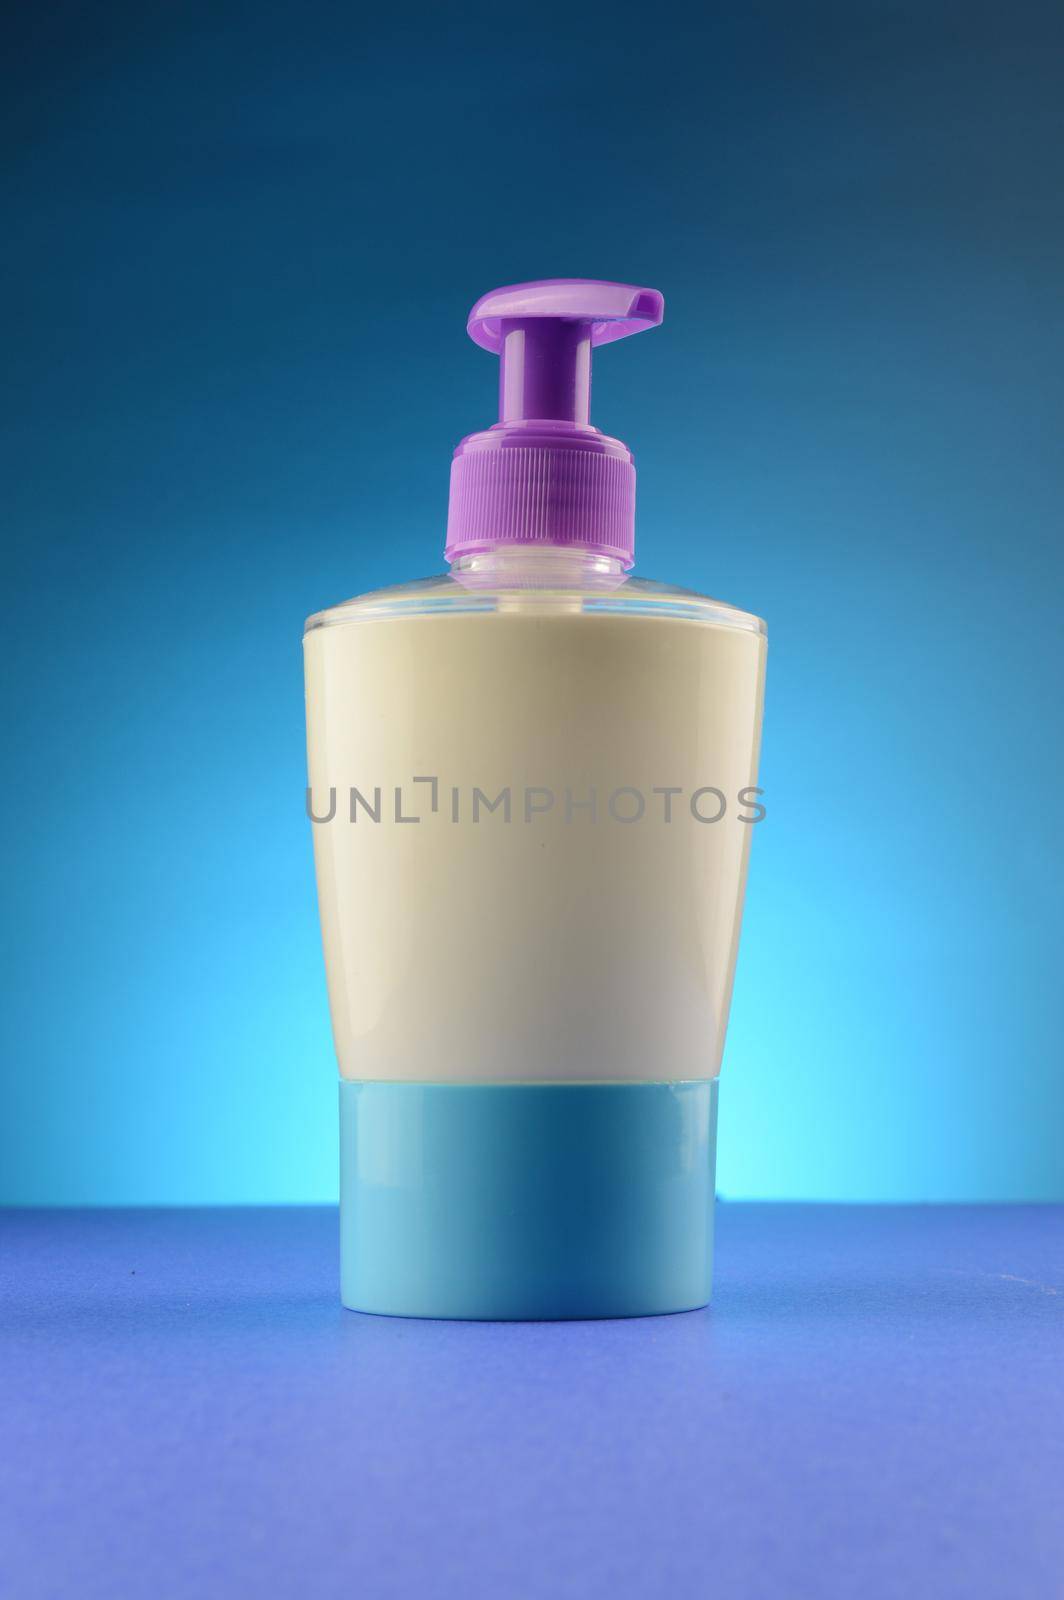 A liquid soap dispenser over a clean blue background.